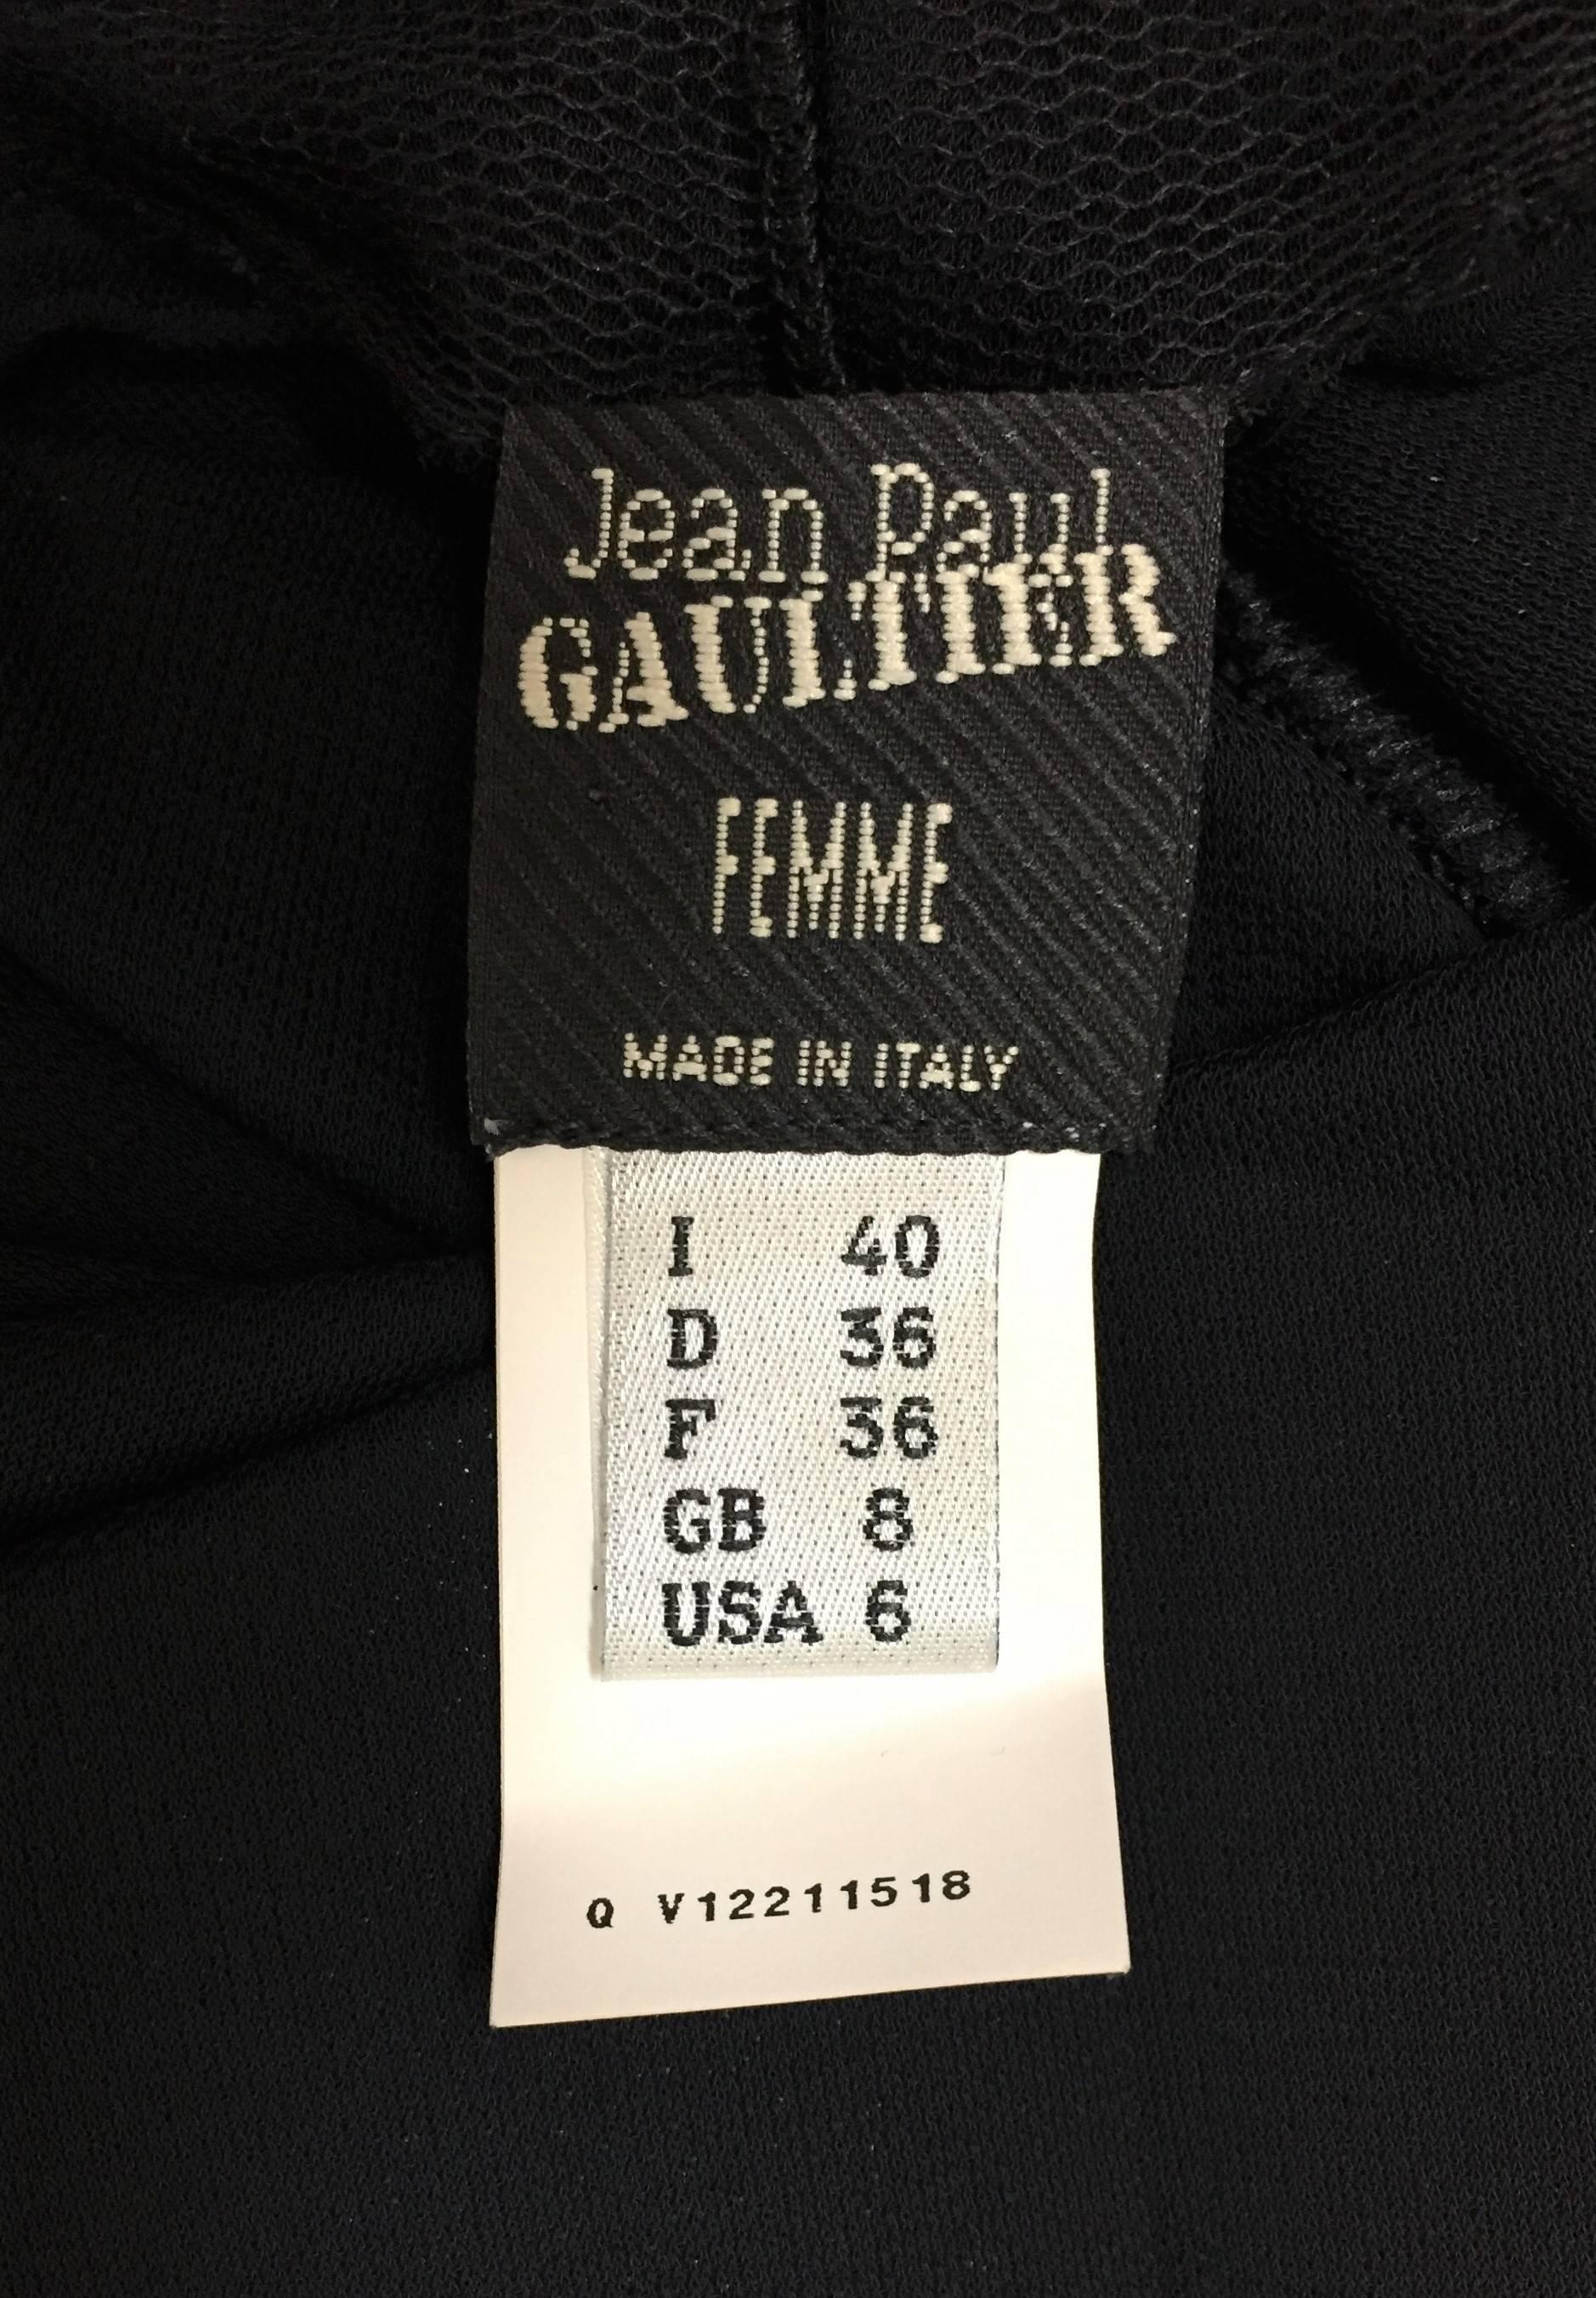 Women's S/S 2010 Jean Paul Gaultier Sheer Black Plunging Applique Mini Dress